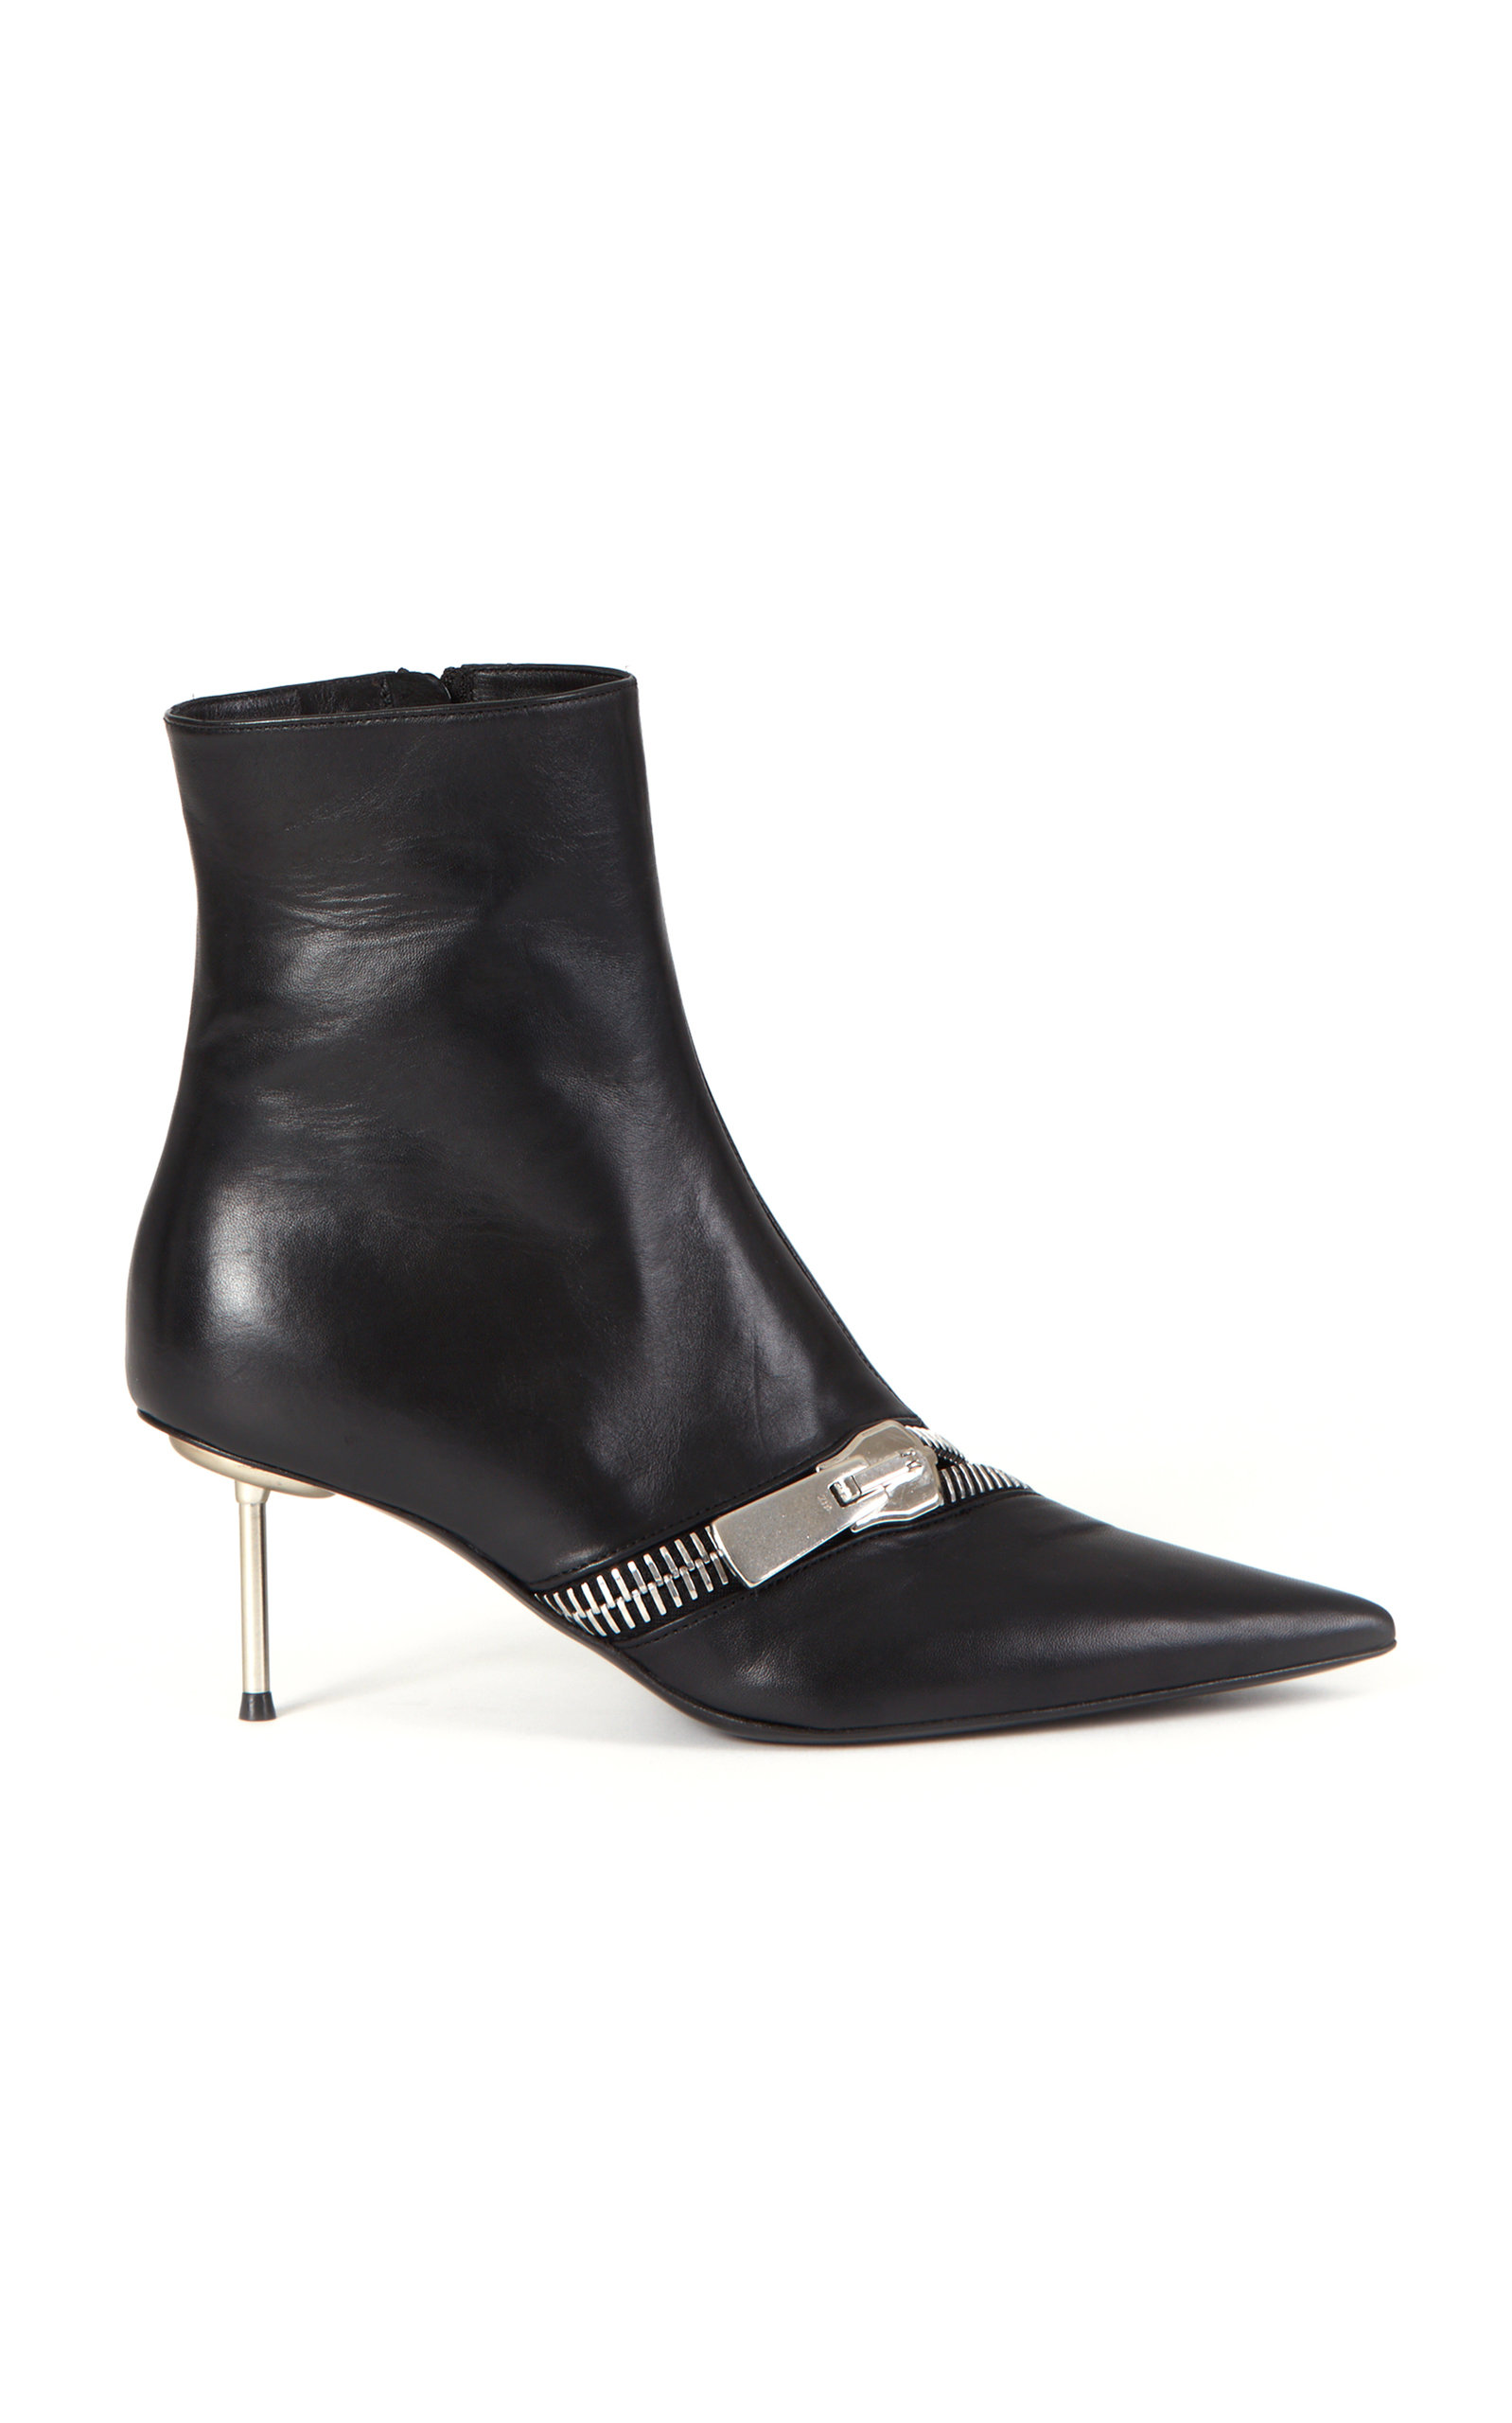 Coperni - Women's Zip Leather Ankle Boots - Black - Only At Moda Operandi